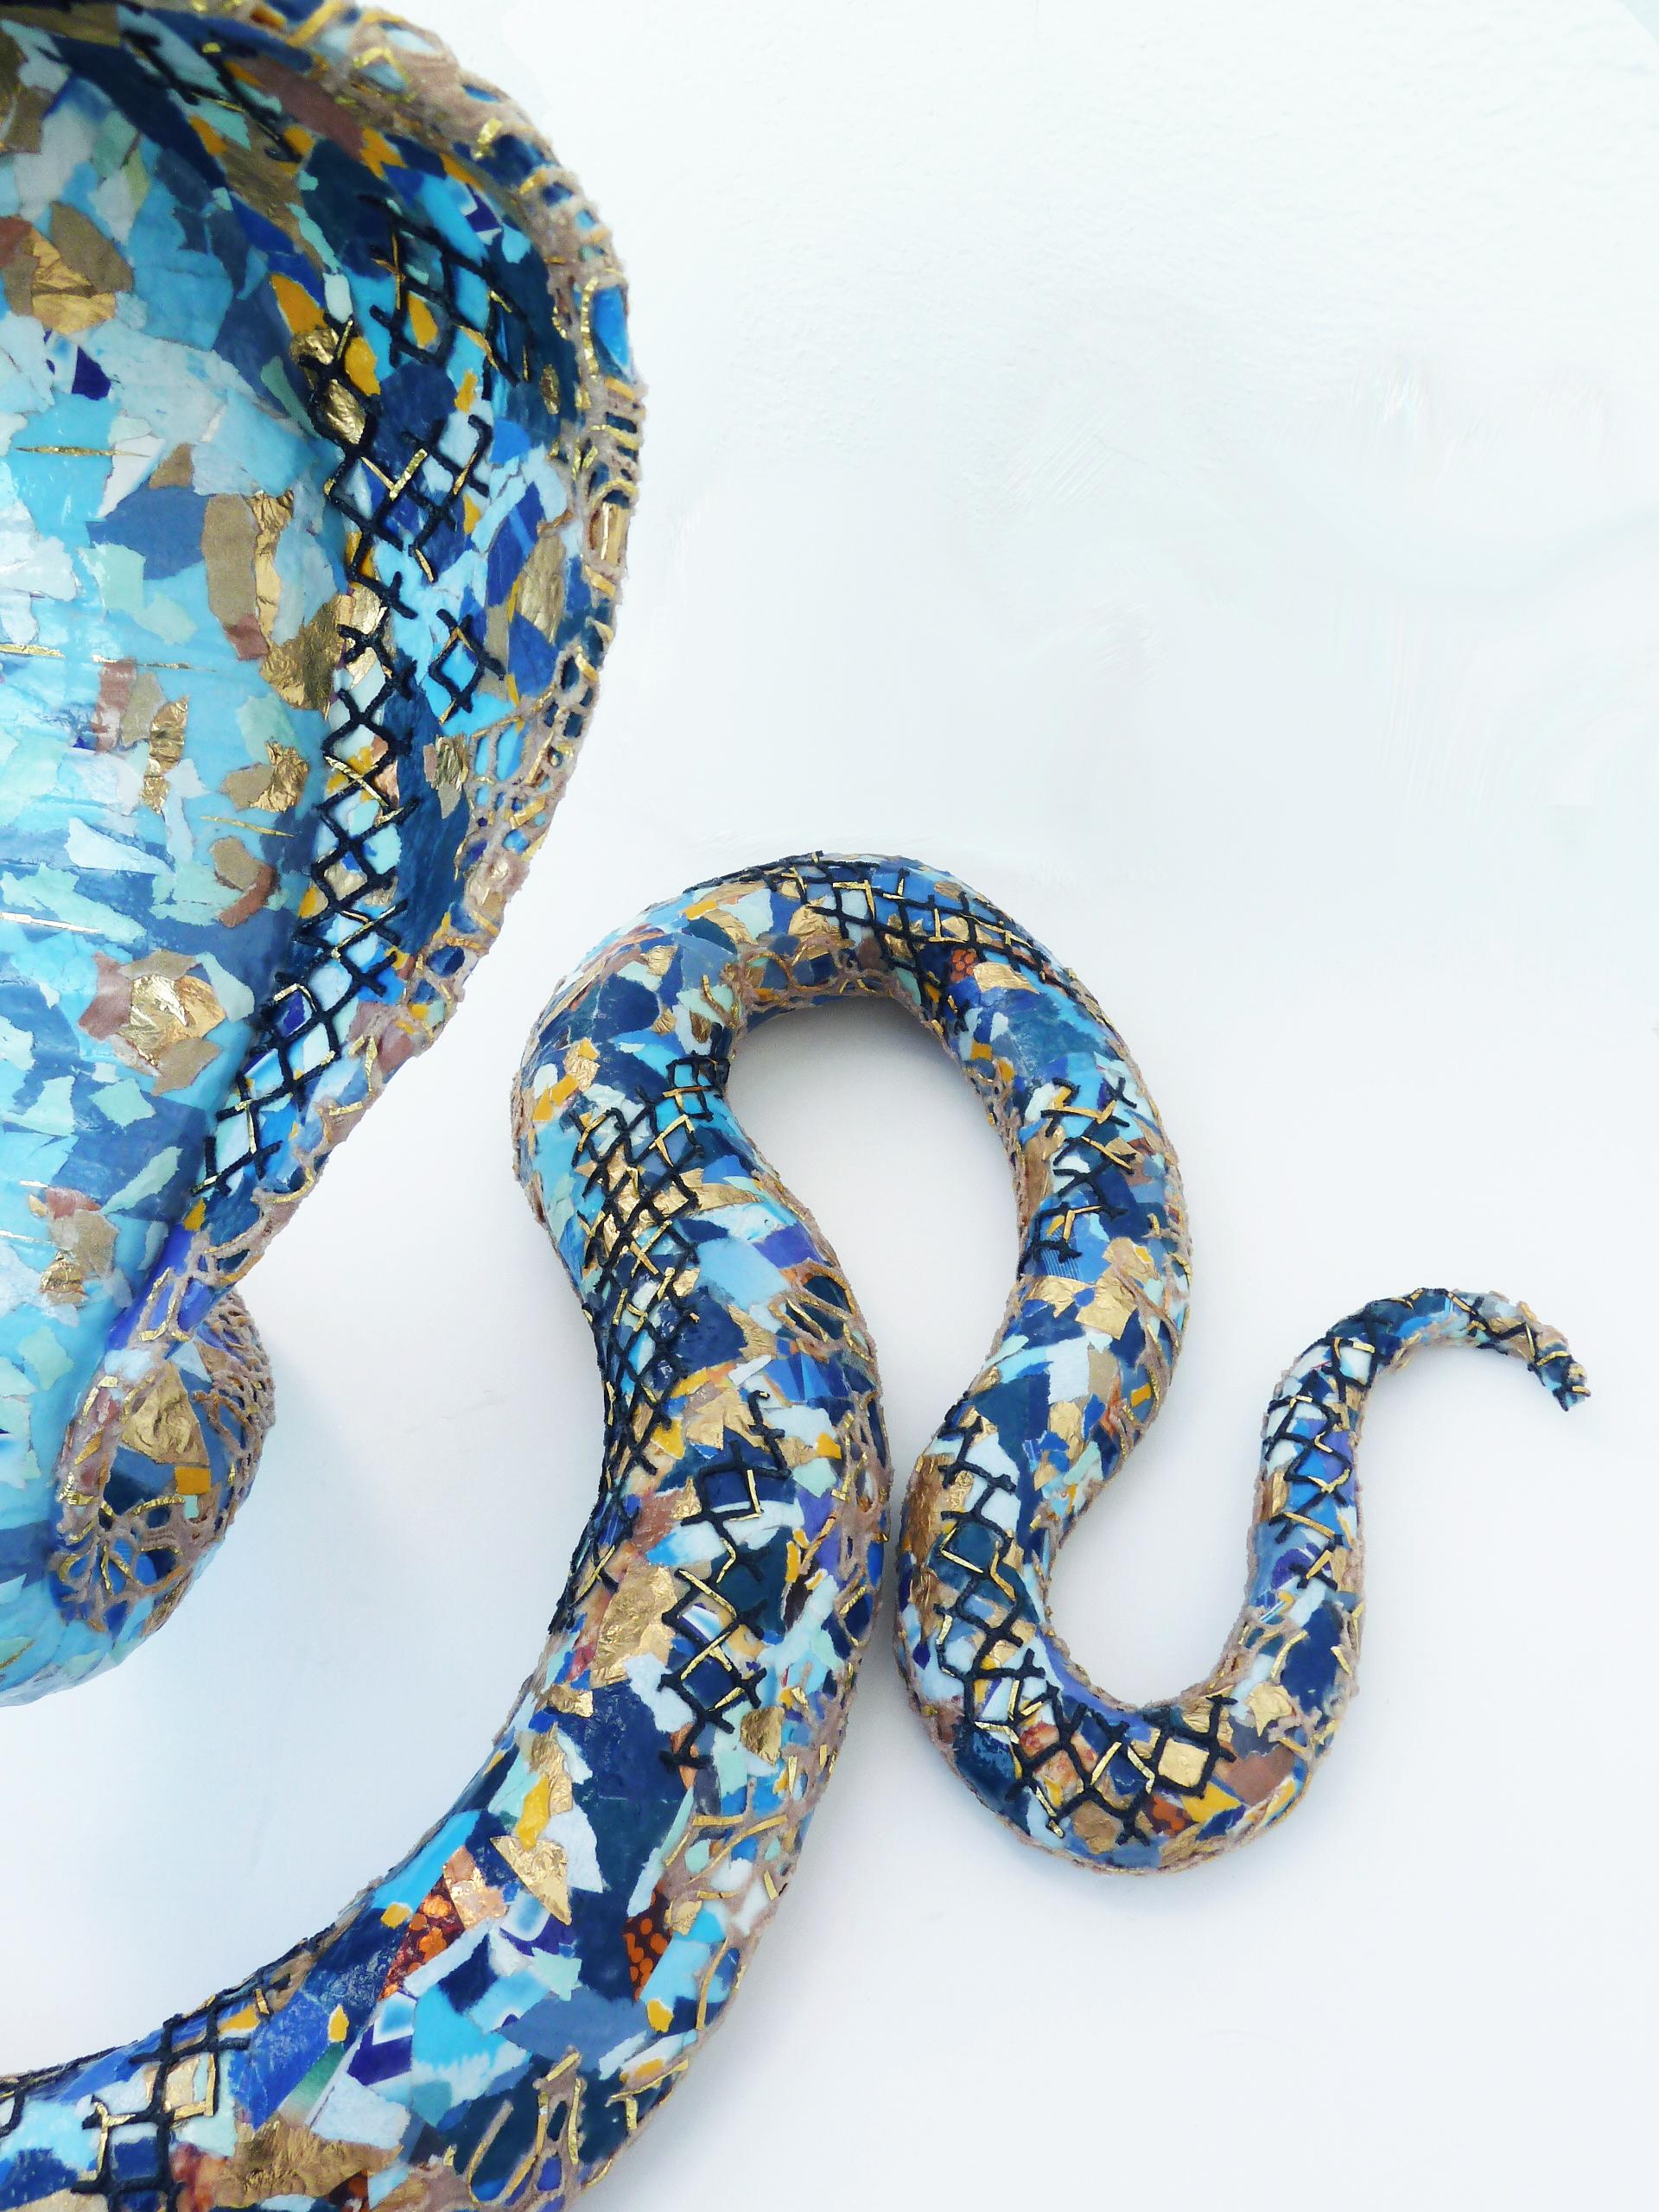 Kara the Cobra - Contemporary Snake Sculpture Upcylced Materials  (Blue + Gold) For Sale 5